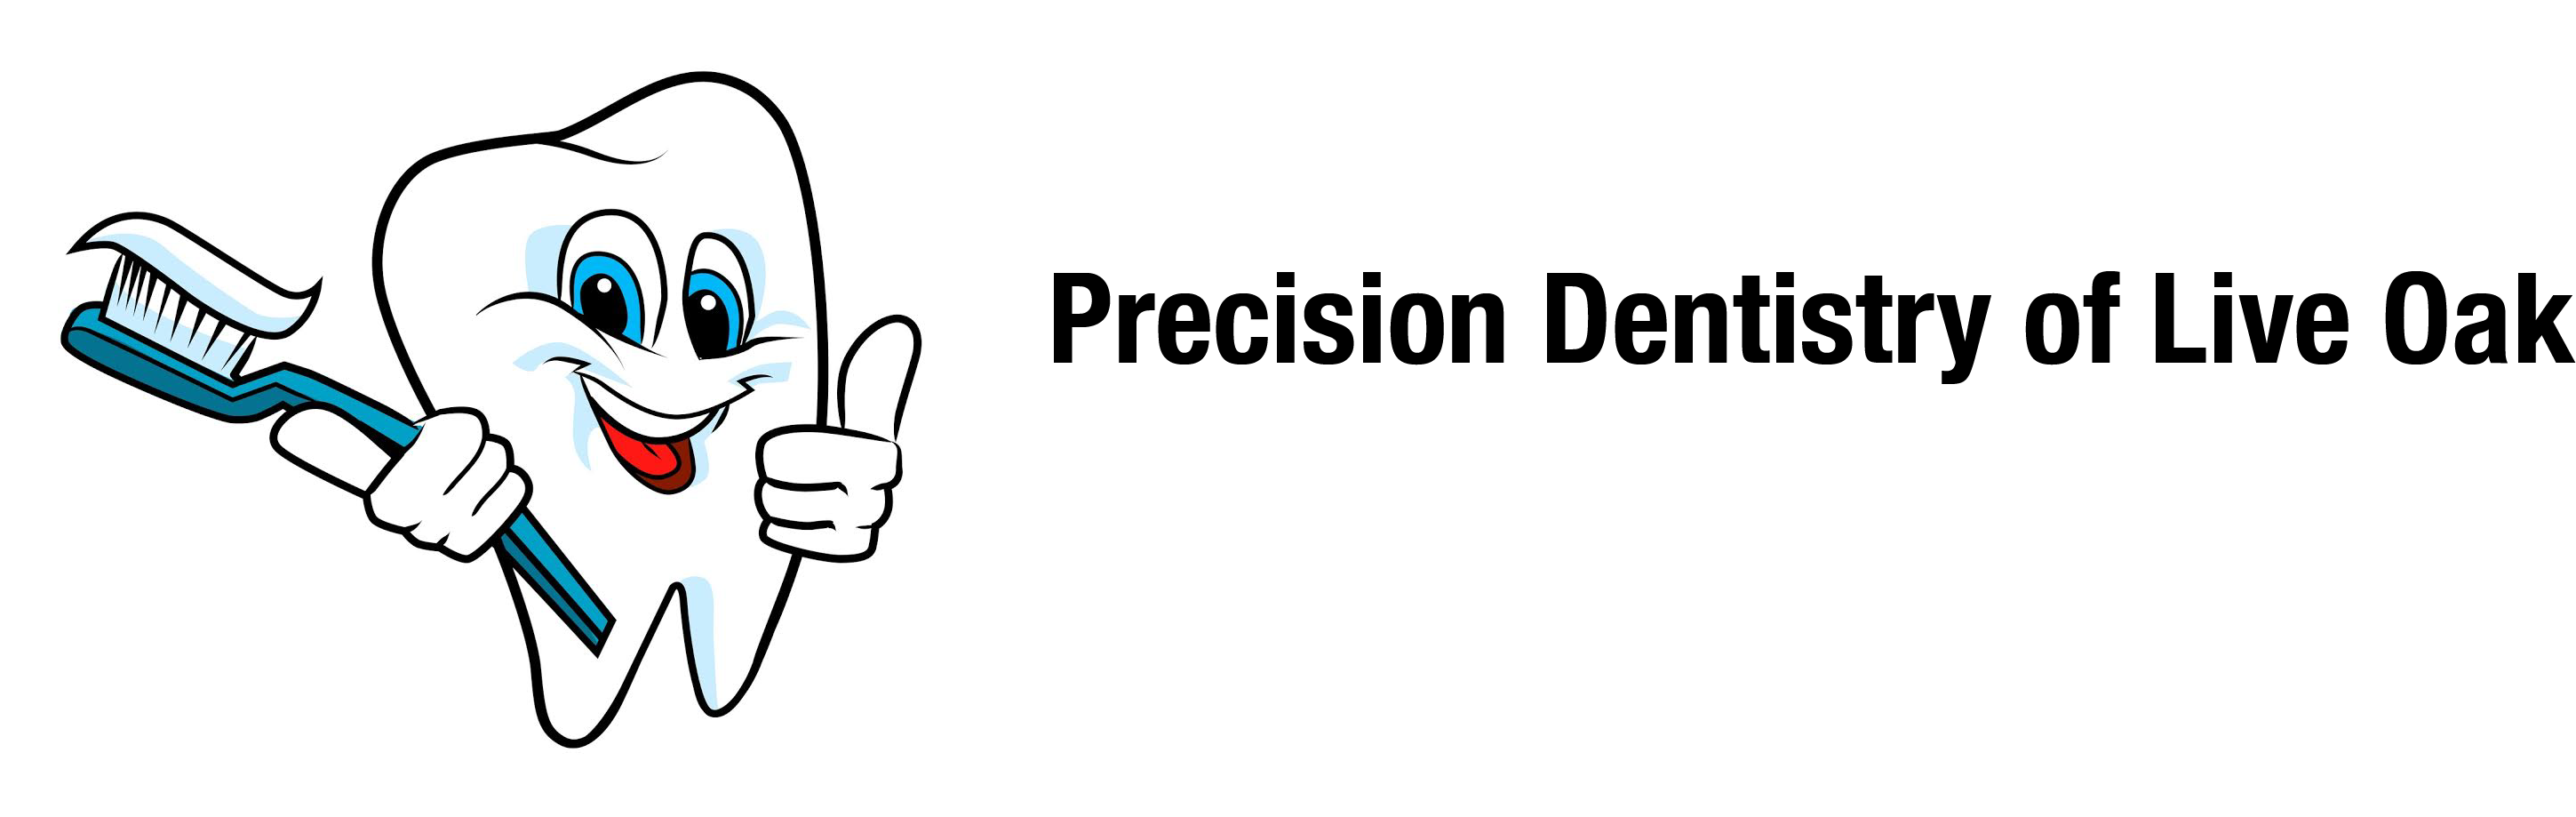 Business logo of Precision Dentistry of Live Oak